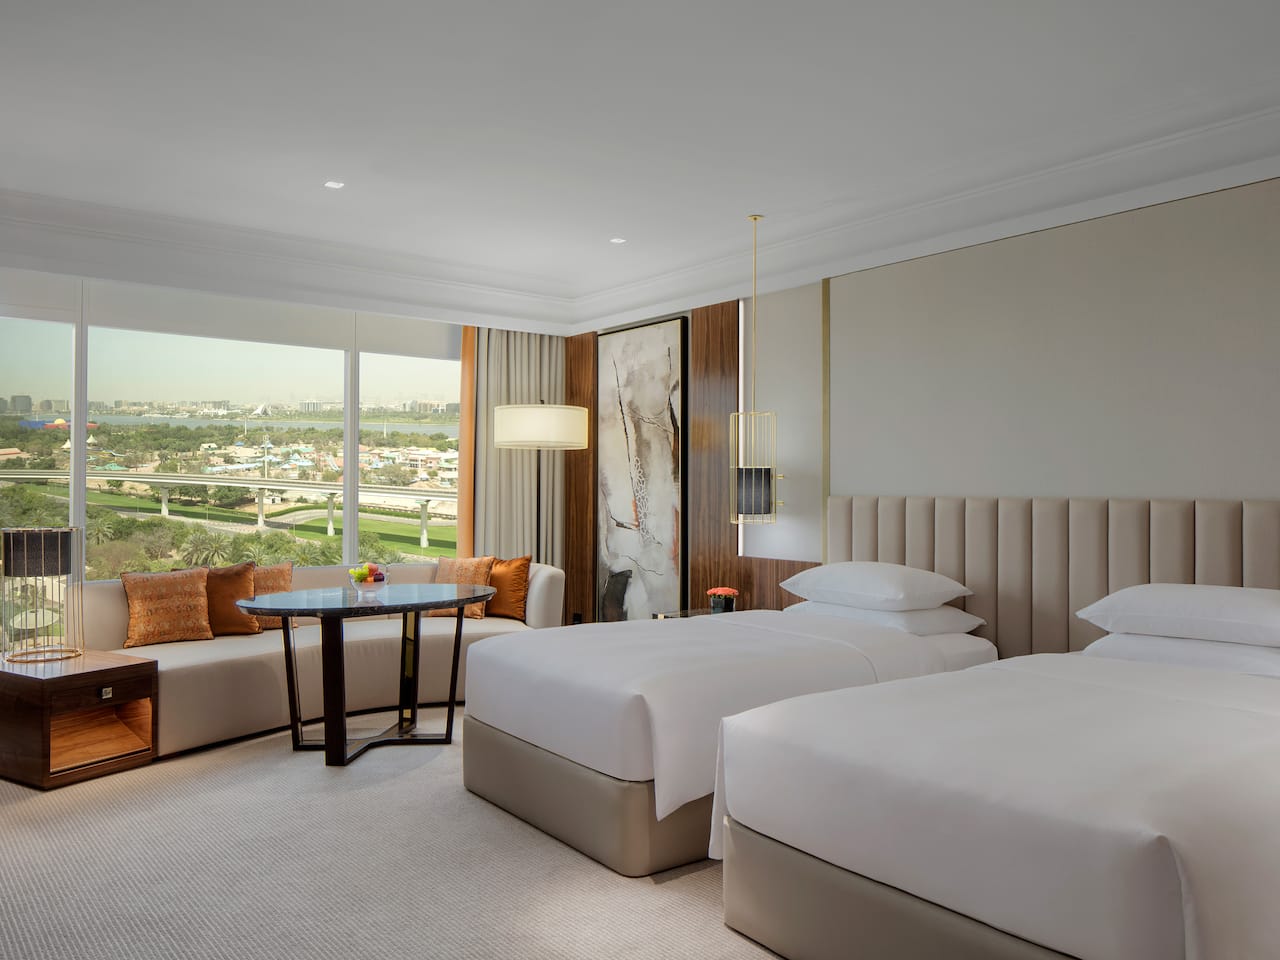 Luxurious Twin Room at the Grand Hyatt Dubai